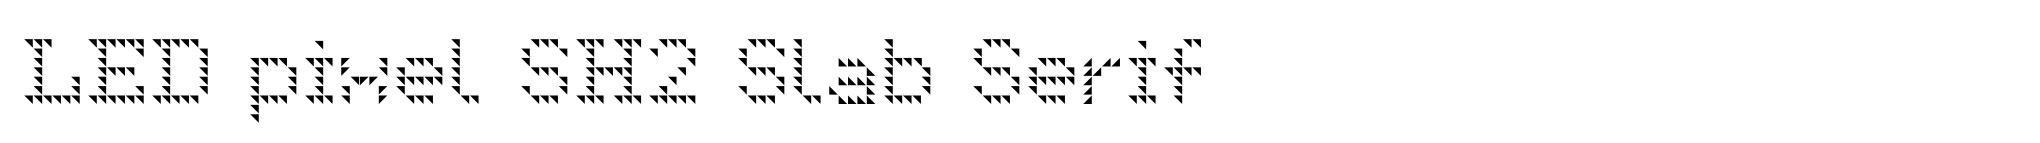 LED pixel SH2 Slab Serif image